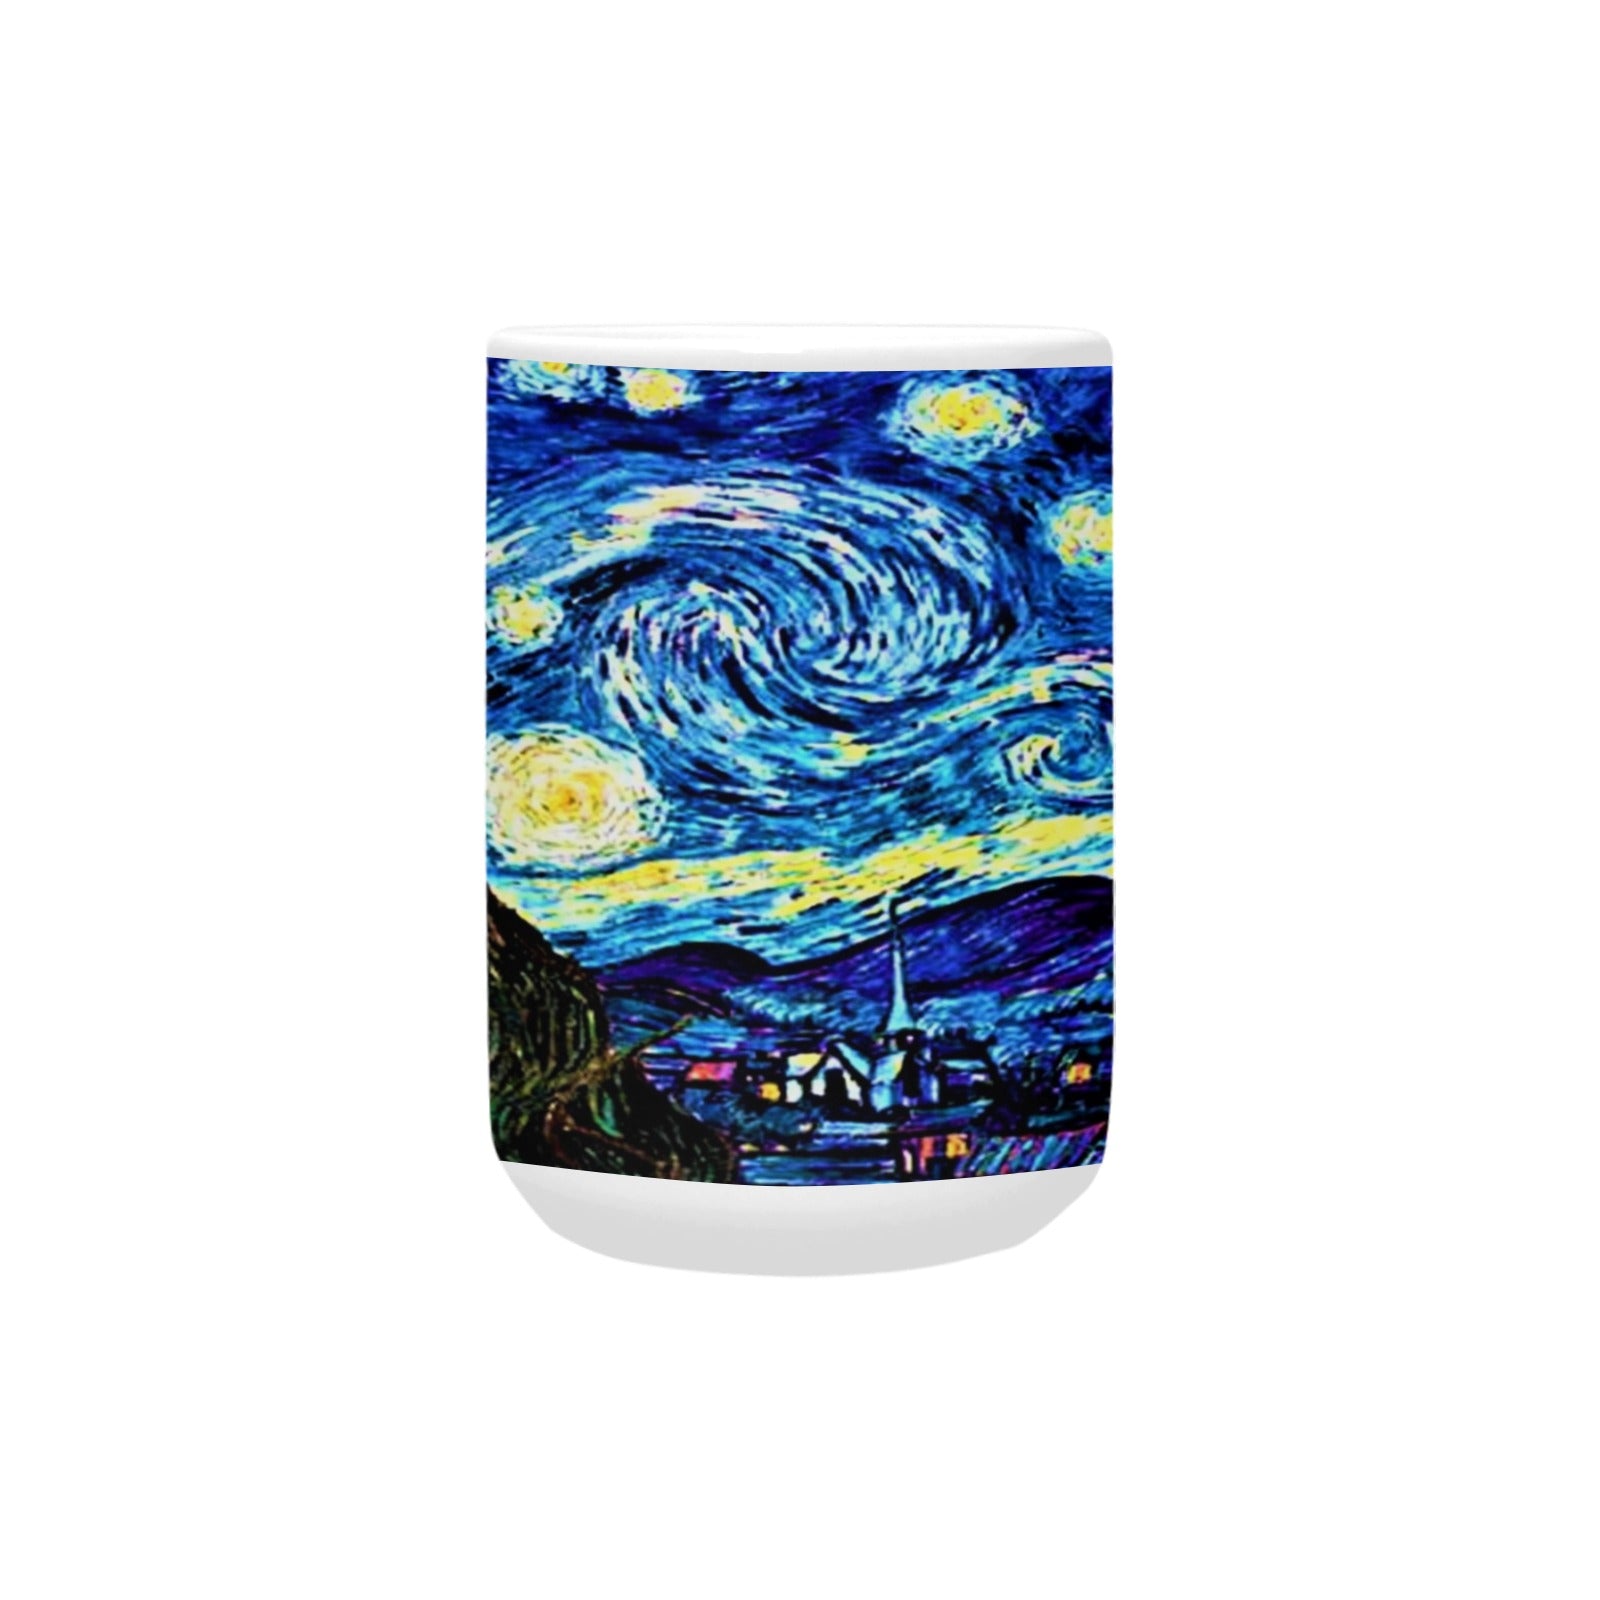 Starry Night 15 oz Ceramic Mug (Made in USA)